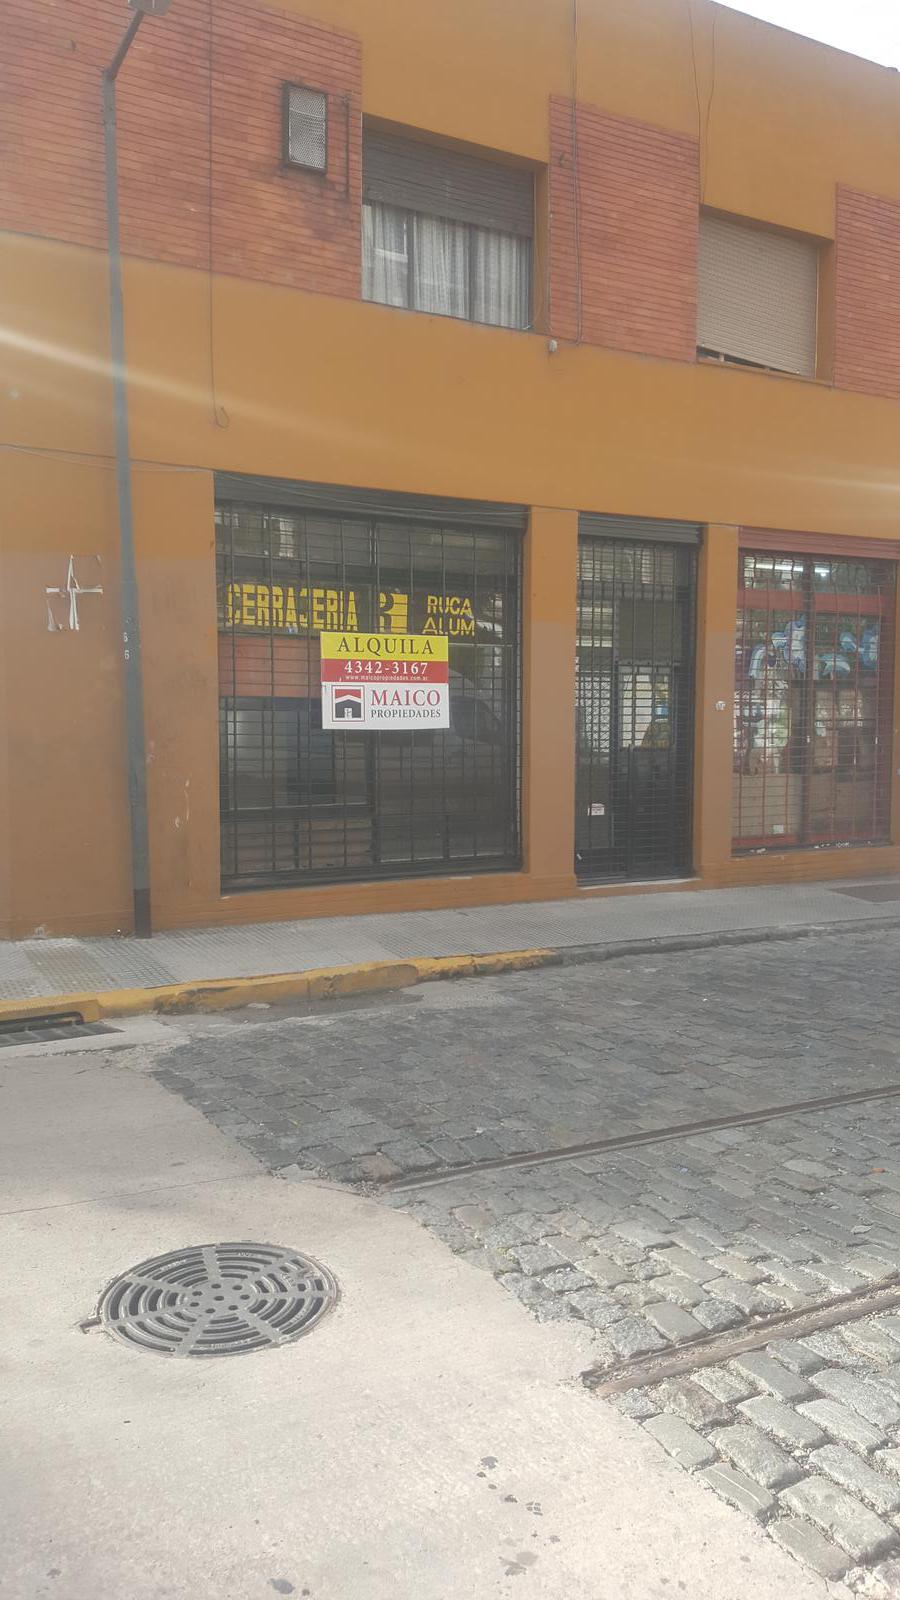 #5095116 | Rental | Store | San Telmo (Maico Propiedades)